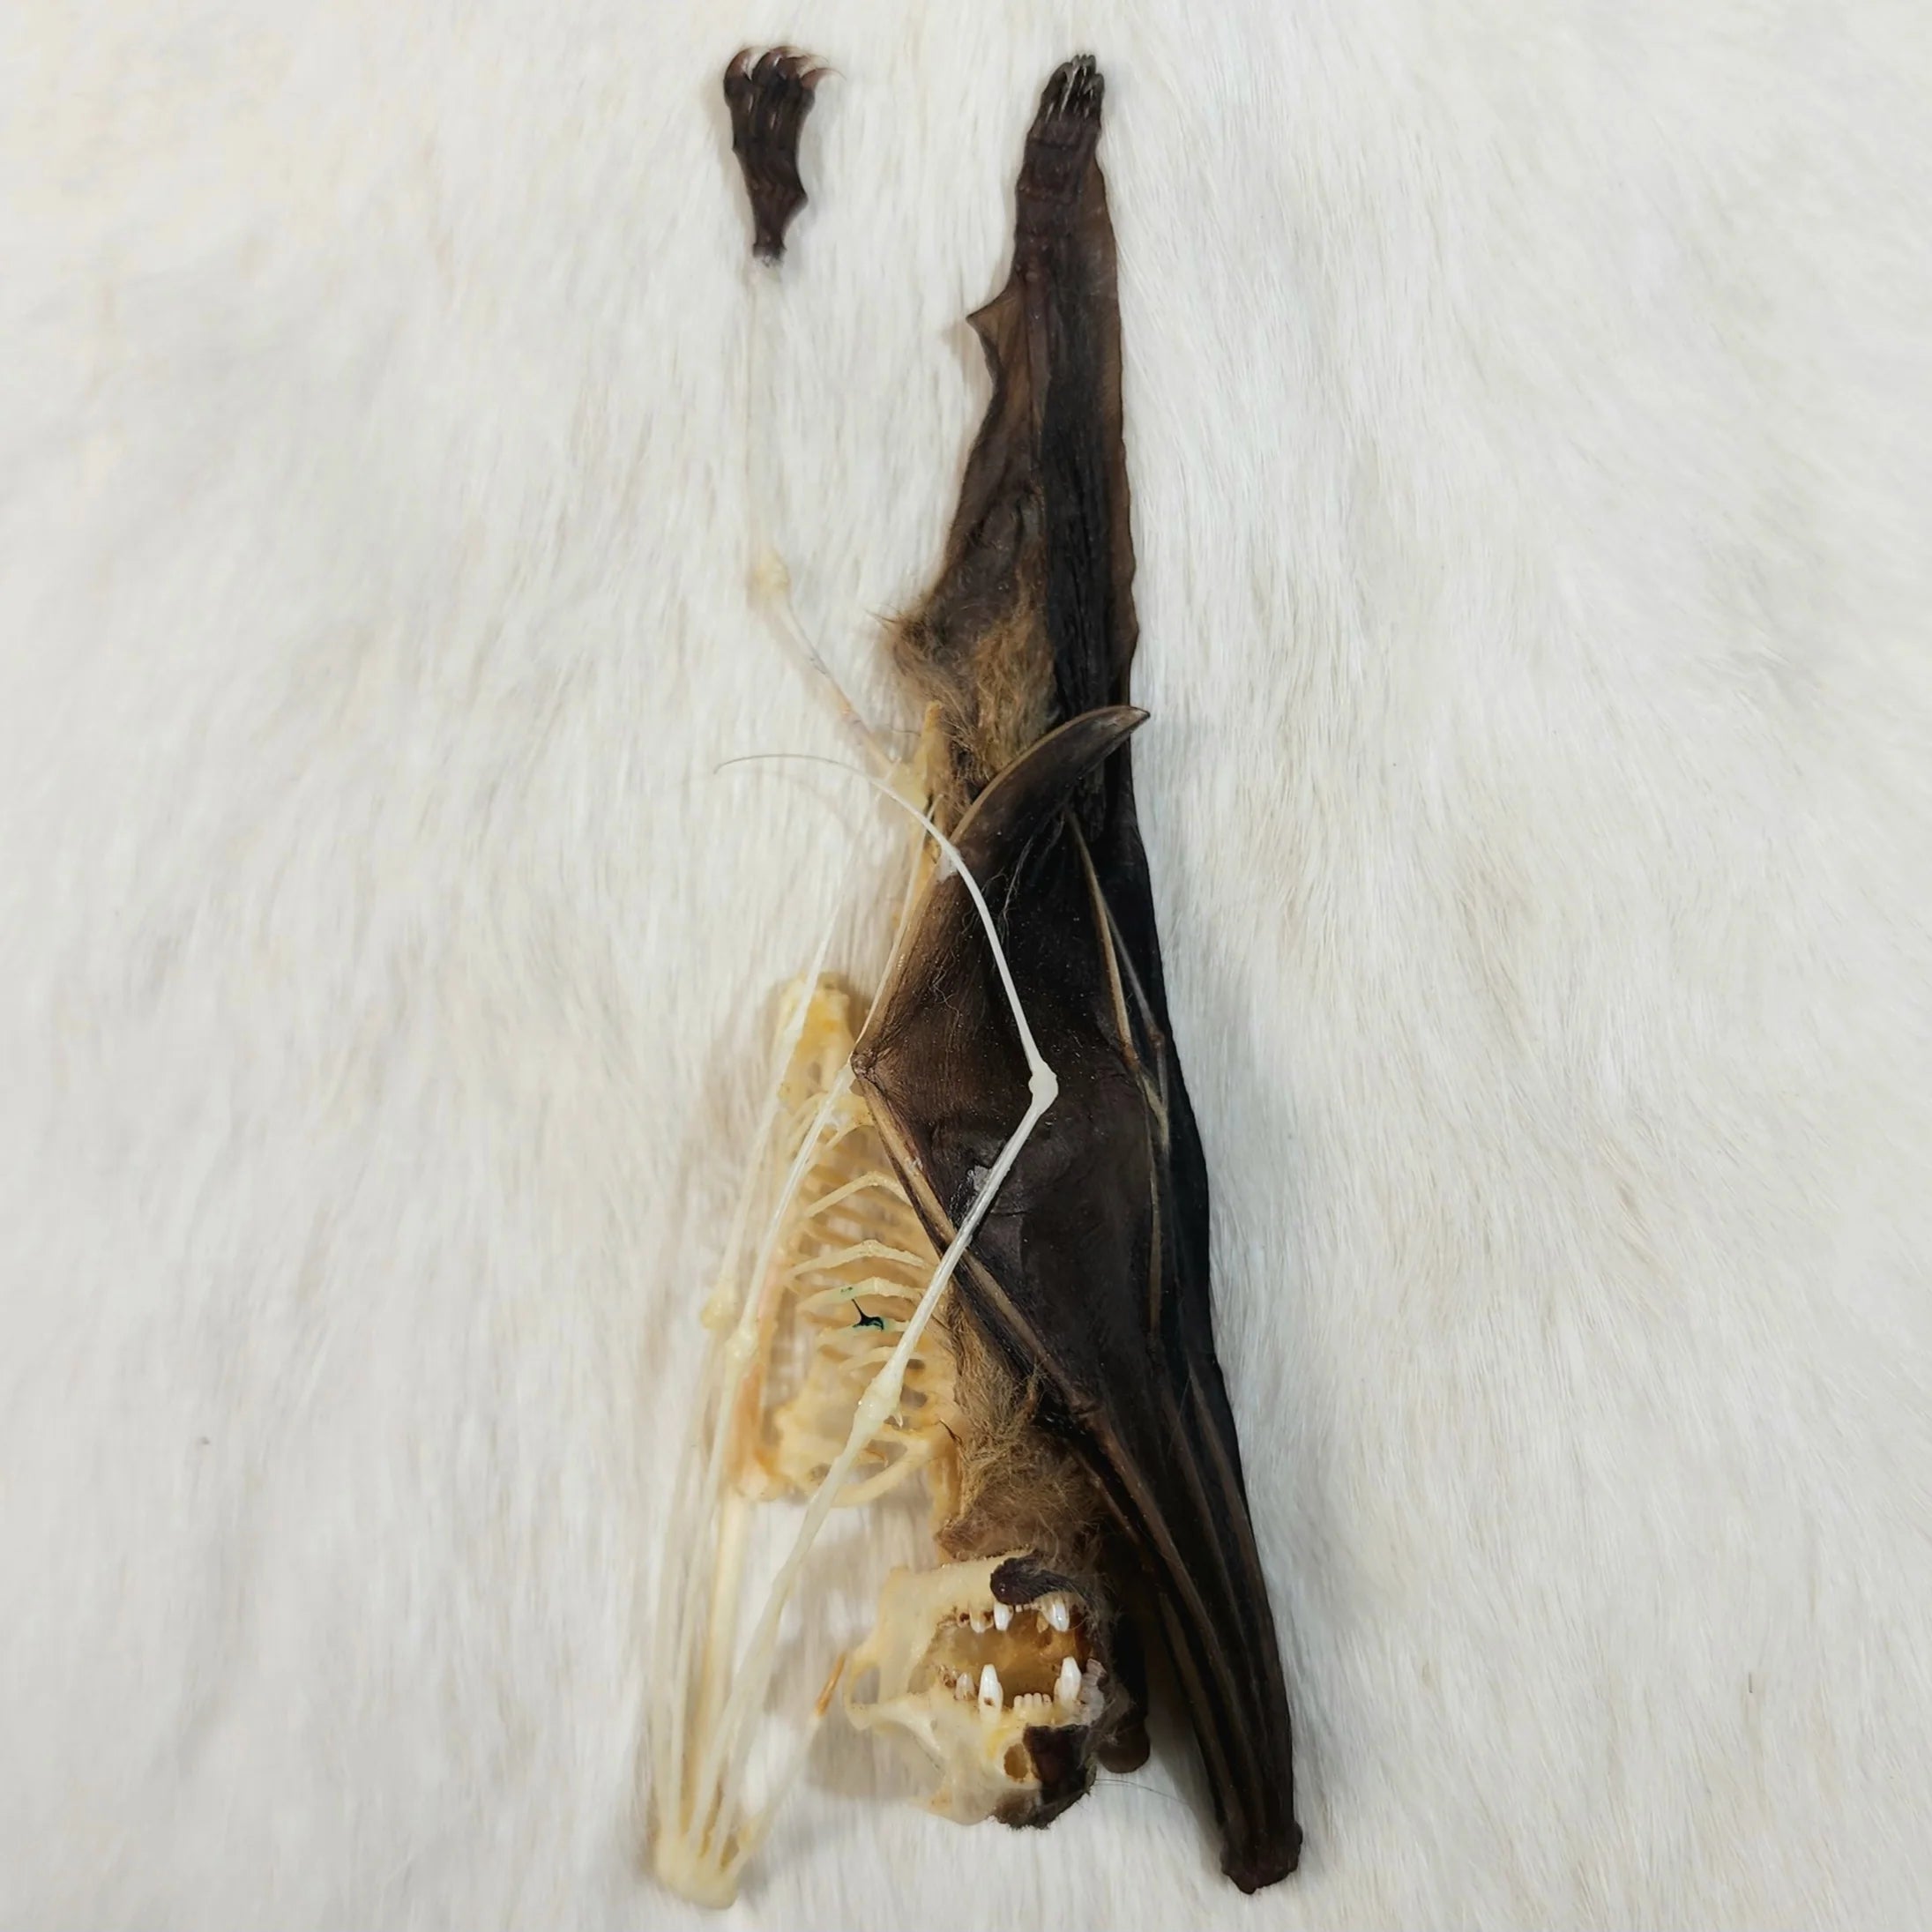 Minute Fruit Bat - Comparative Anatomy